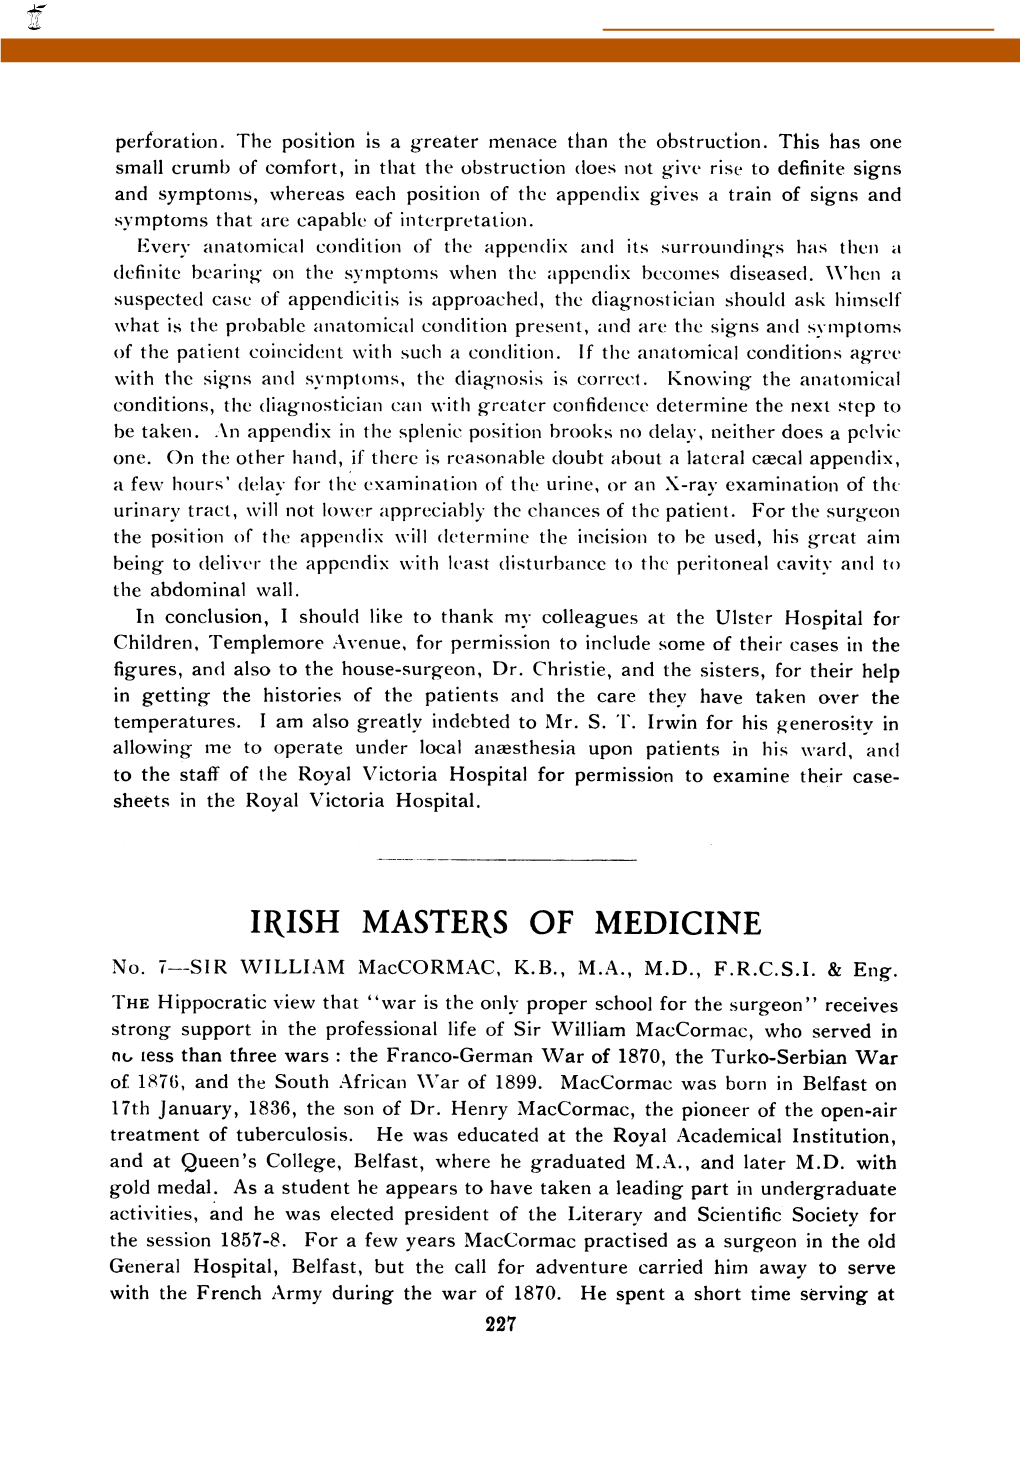 IRISH MASTERS of MEDICINE No